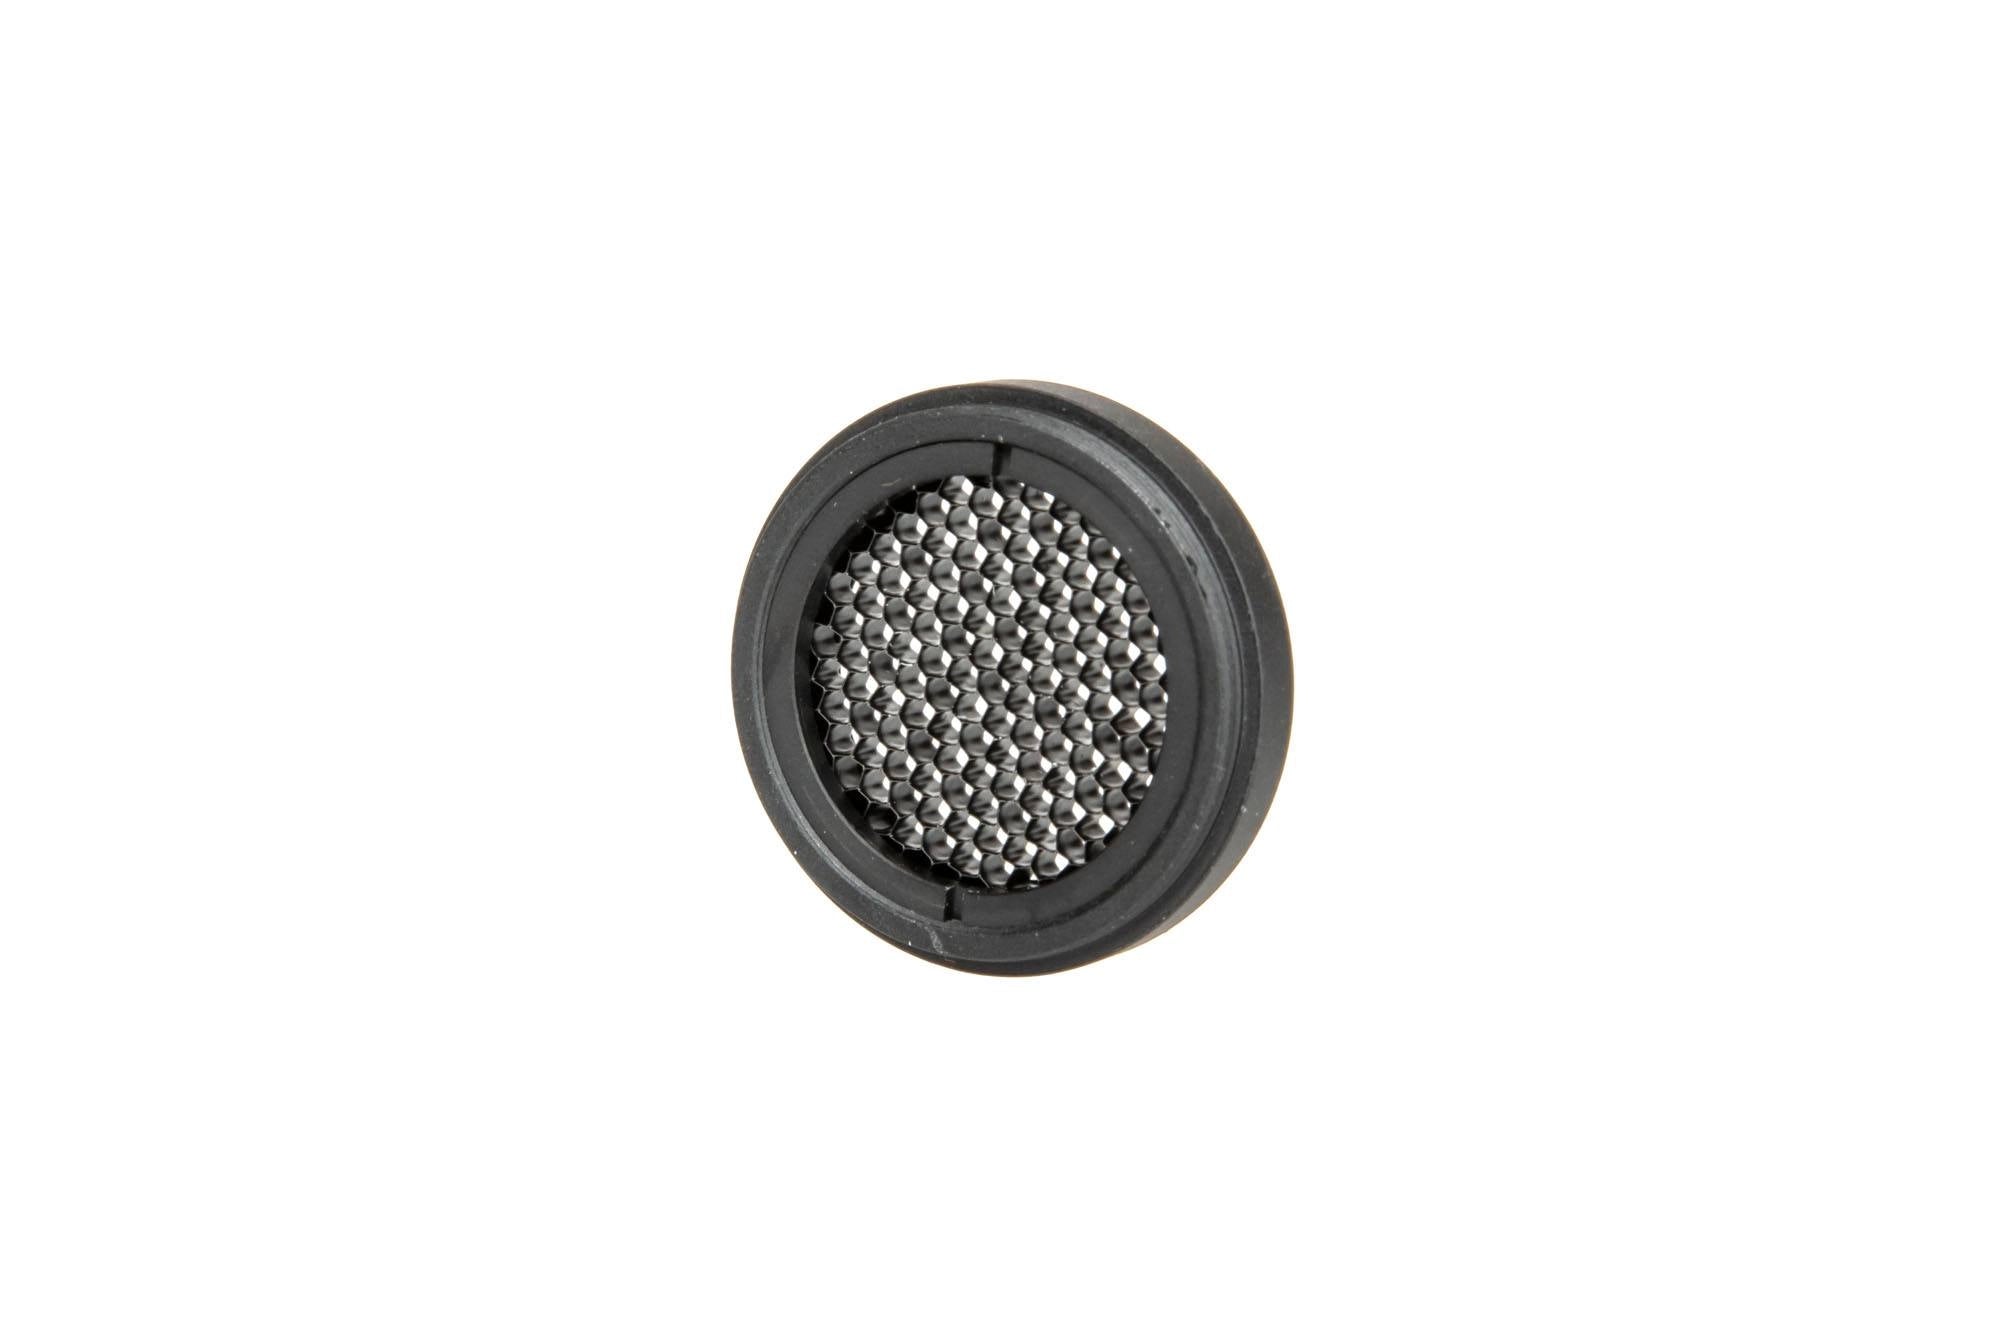 Killflash Cover for G33 3x Magnifier - Black